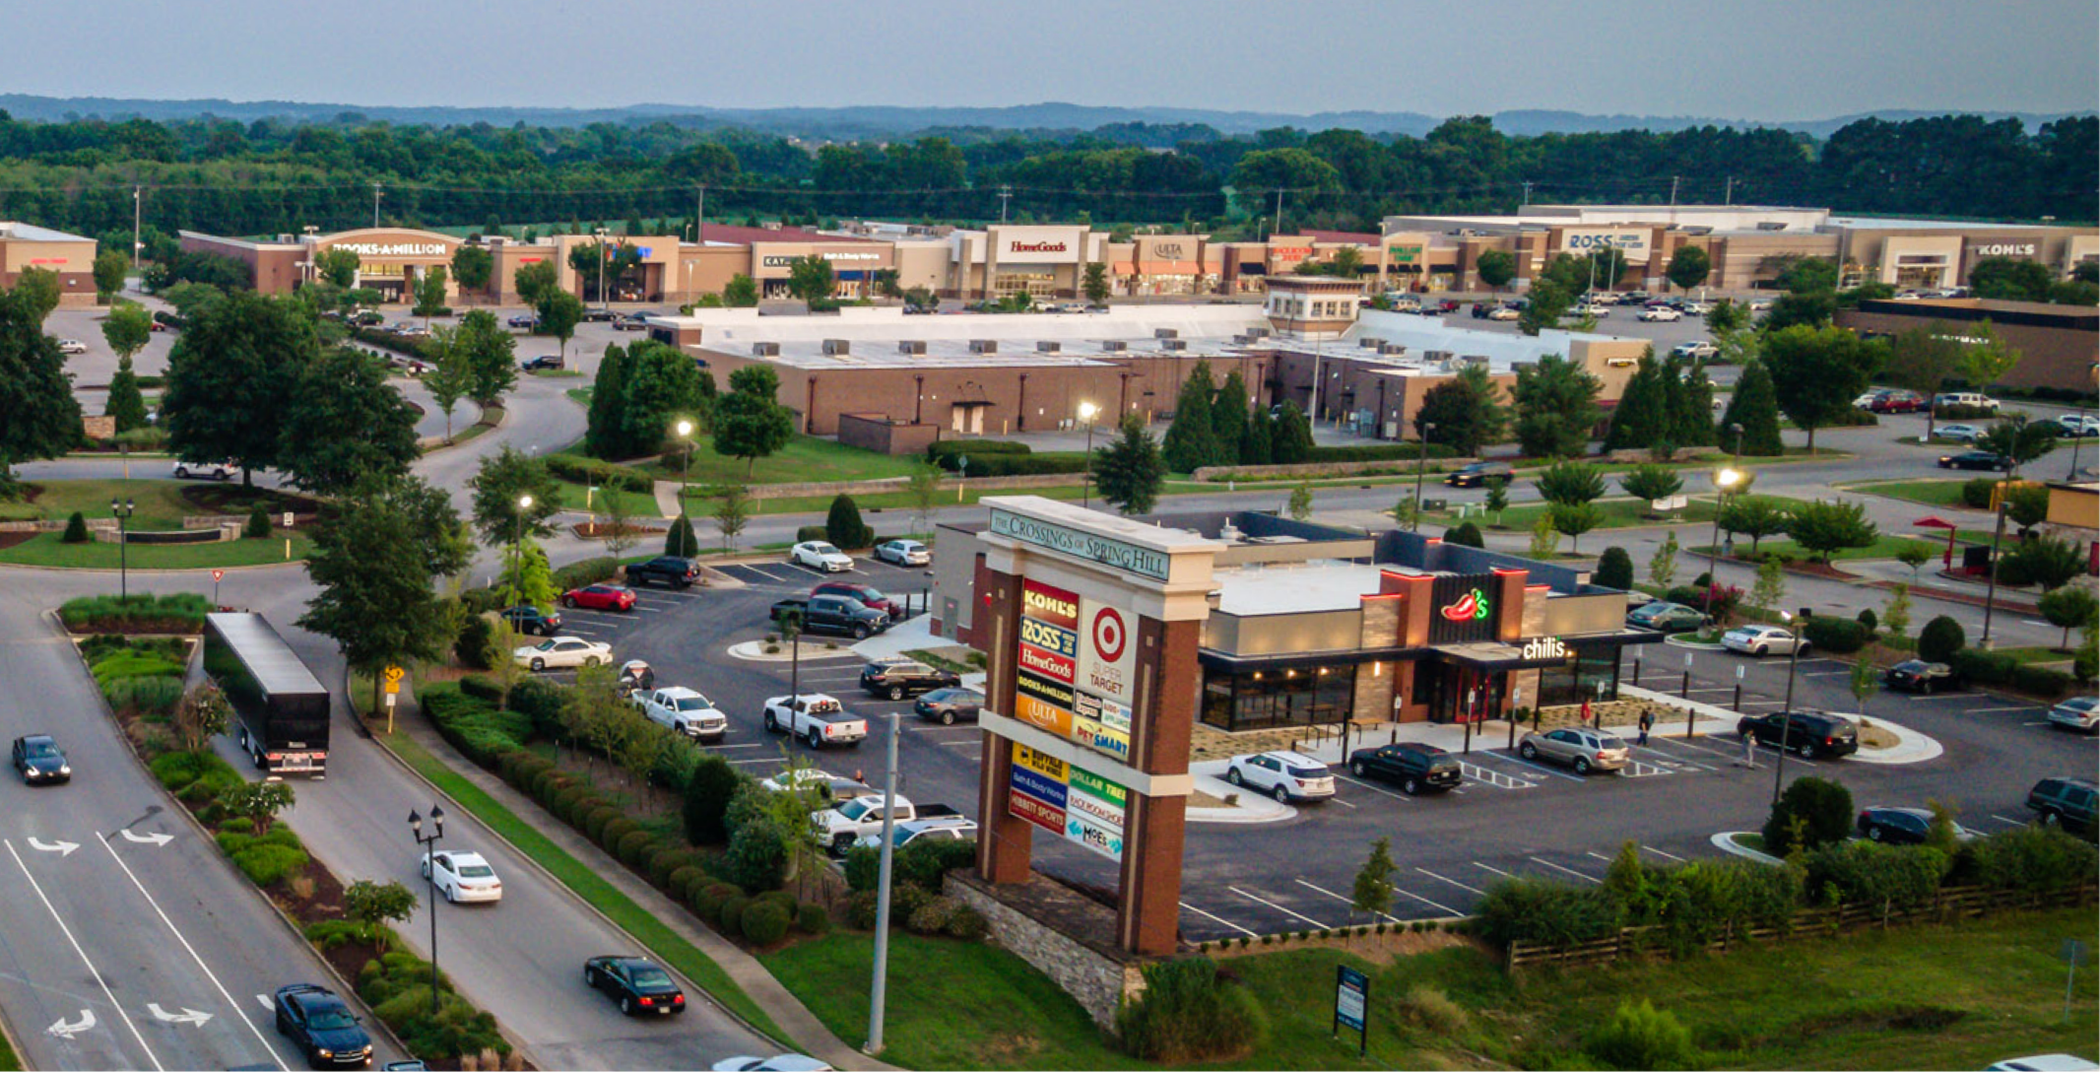 Aerial of shopping center